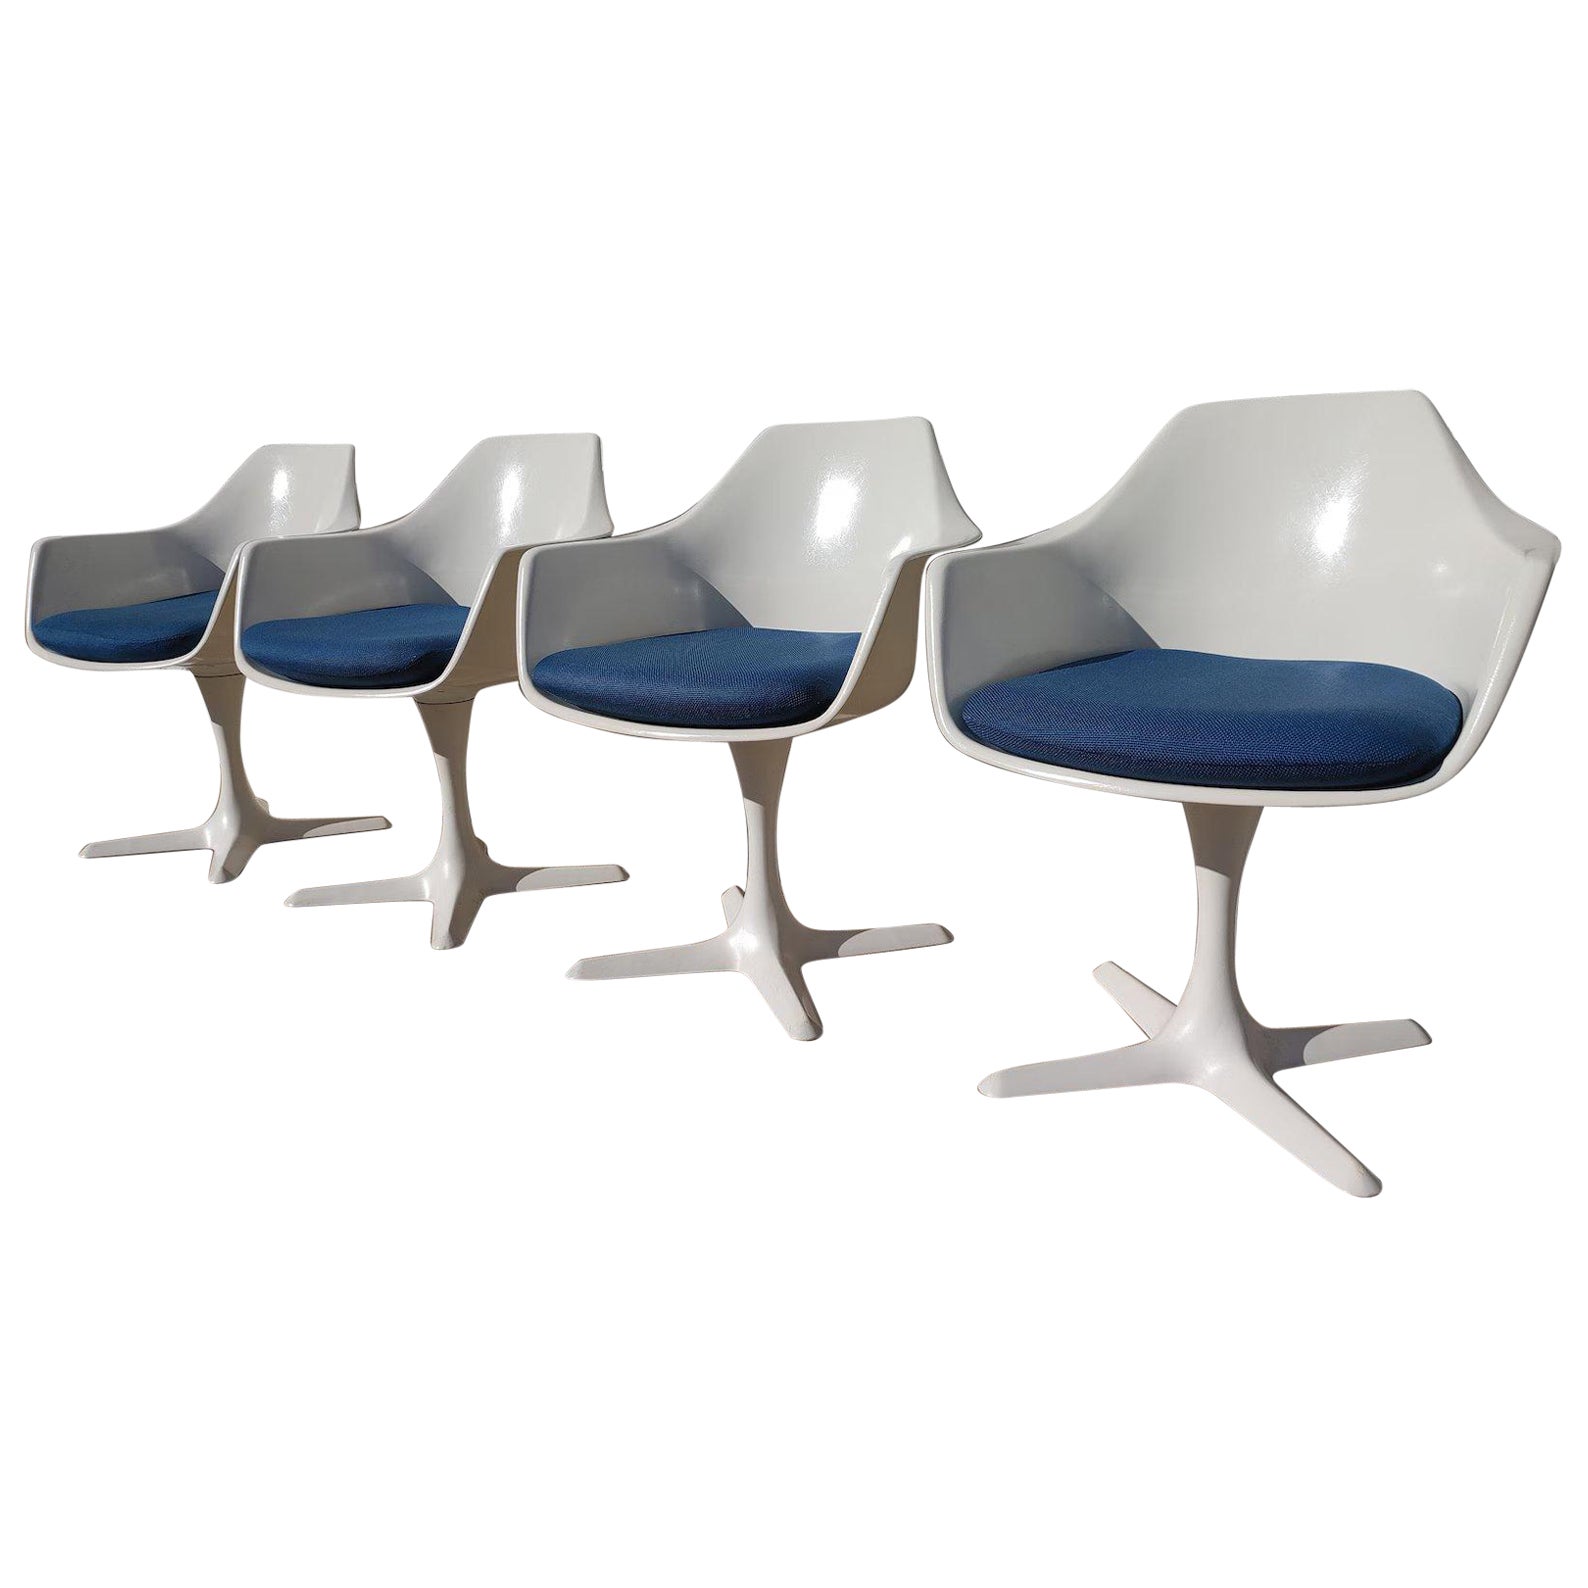 Set of 4 Mid Century Modern Burke Armed Tulip Chairs